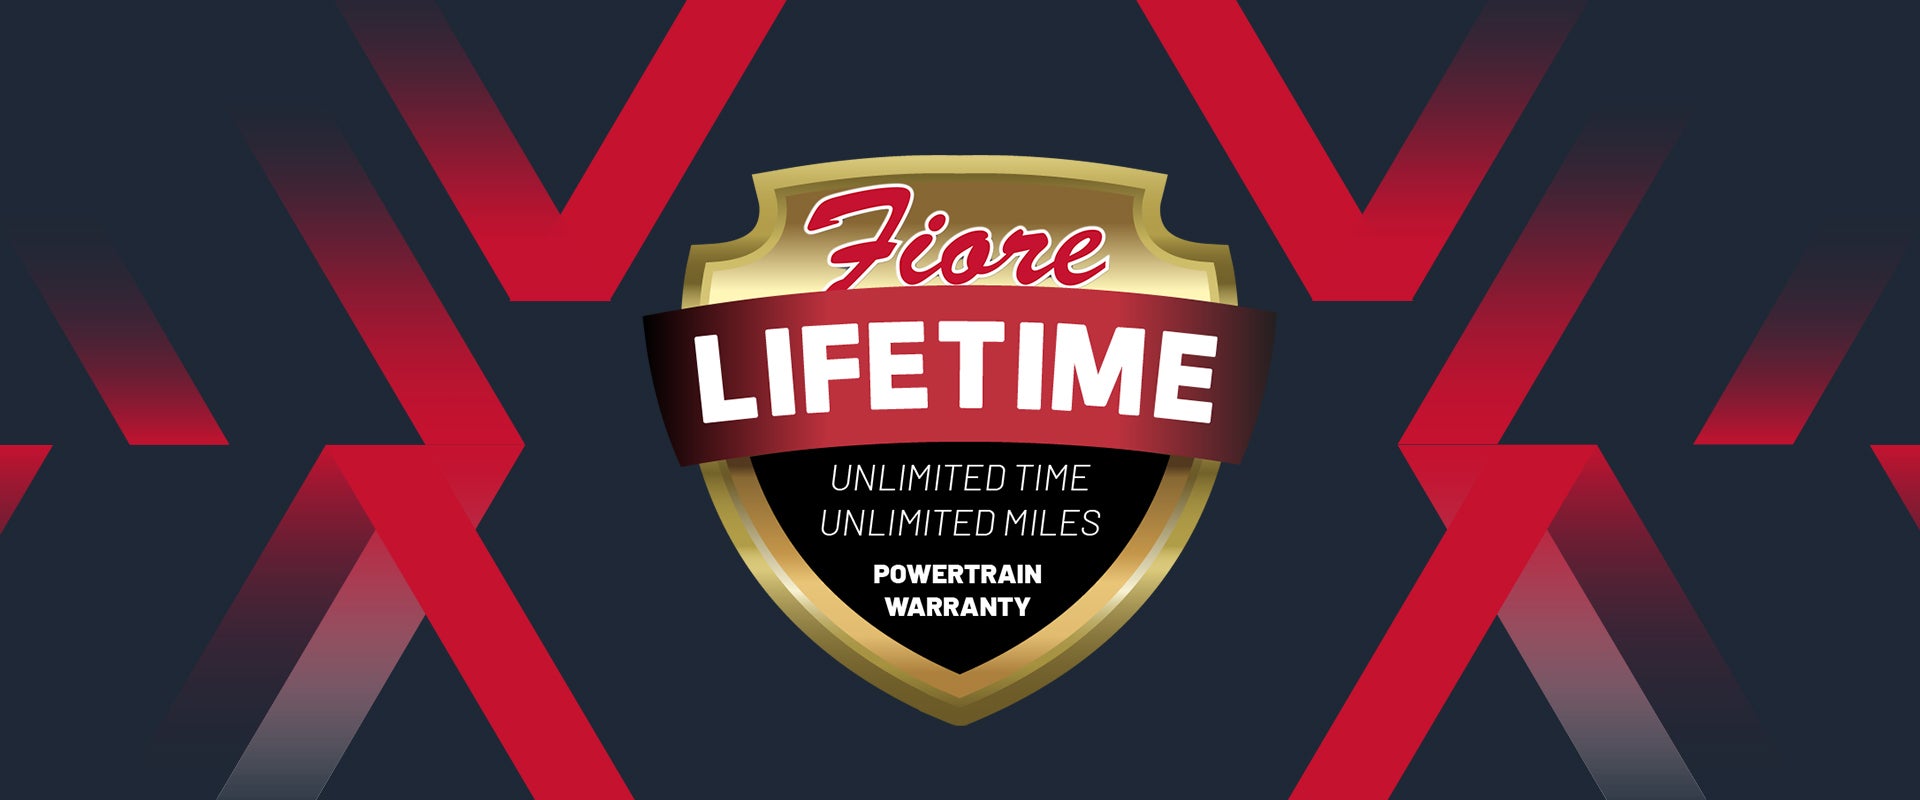 The Lifetime Powertrain Warranty at Fiore | Fiore Lifetime Powertrain Warranty Logo | Fiore Toyota’s Lifetime Powertrain Warranty at Hollidaysburg